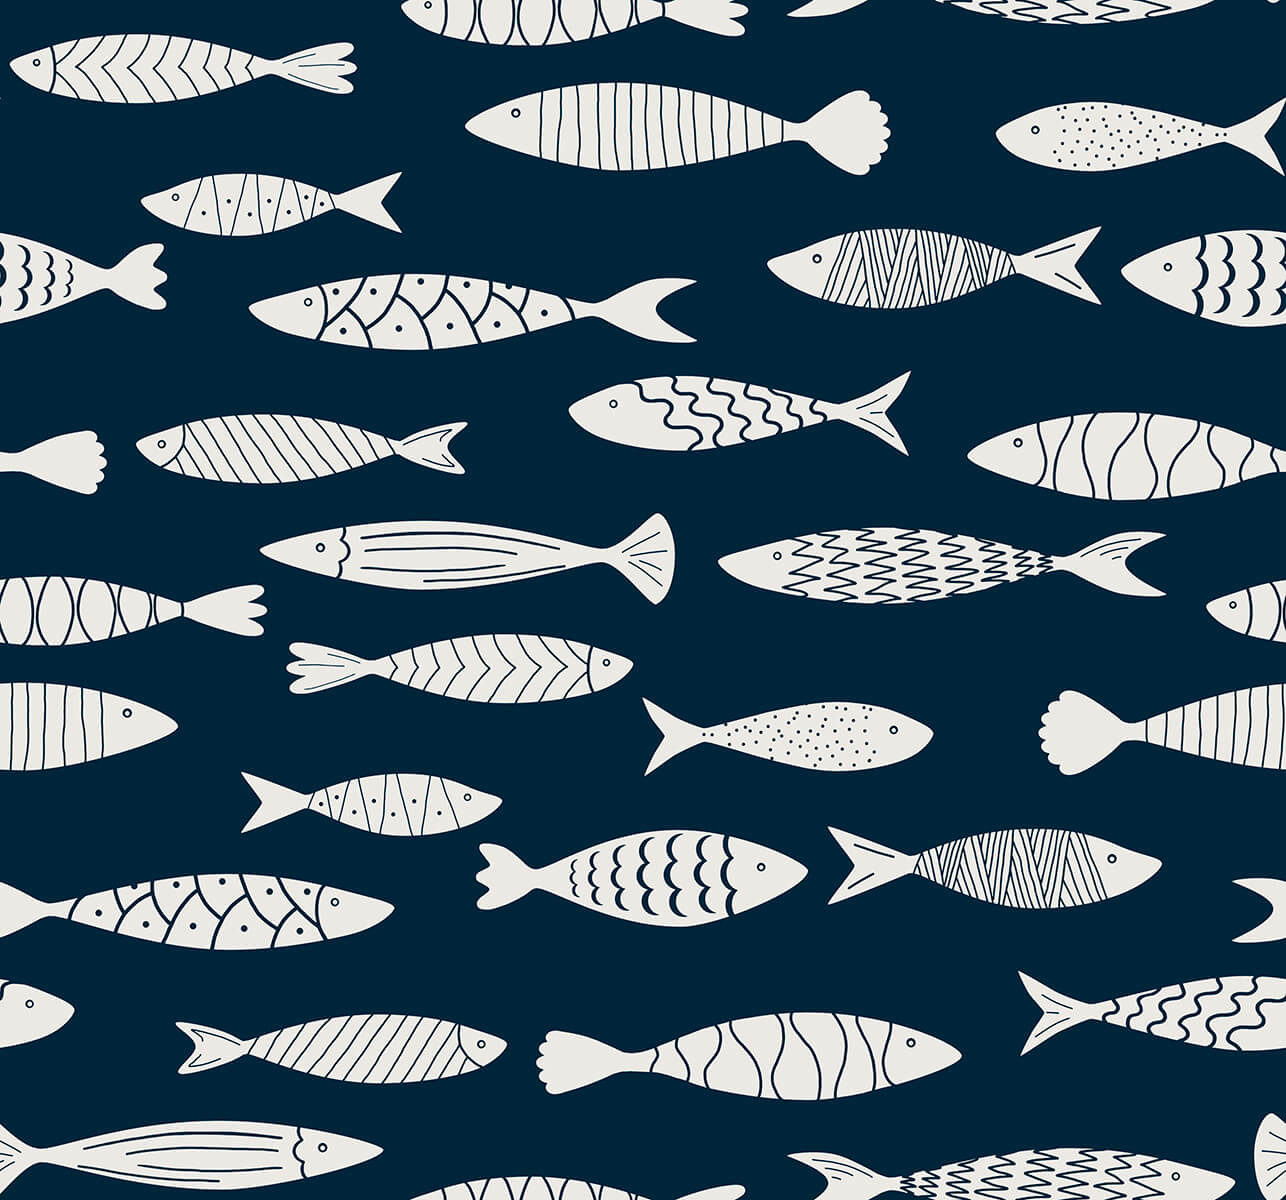 Seabrook Summer House Bay Fish Wallpaper - Deep Seas